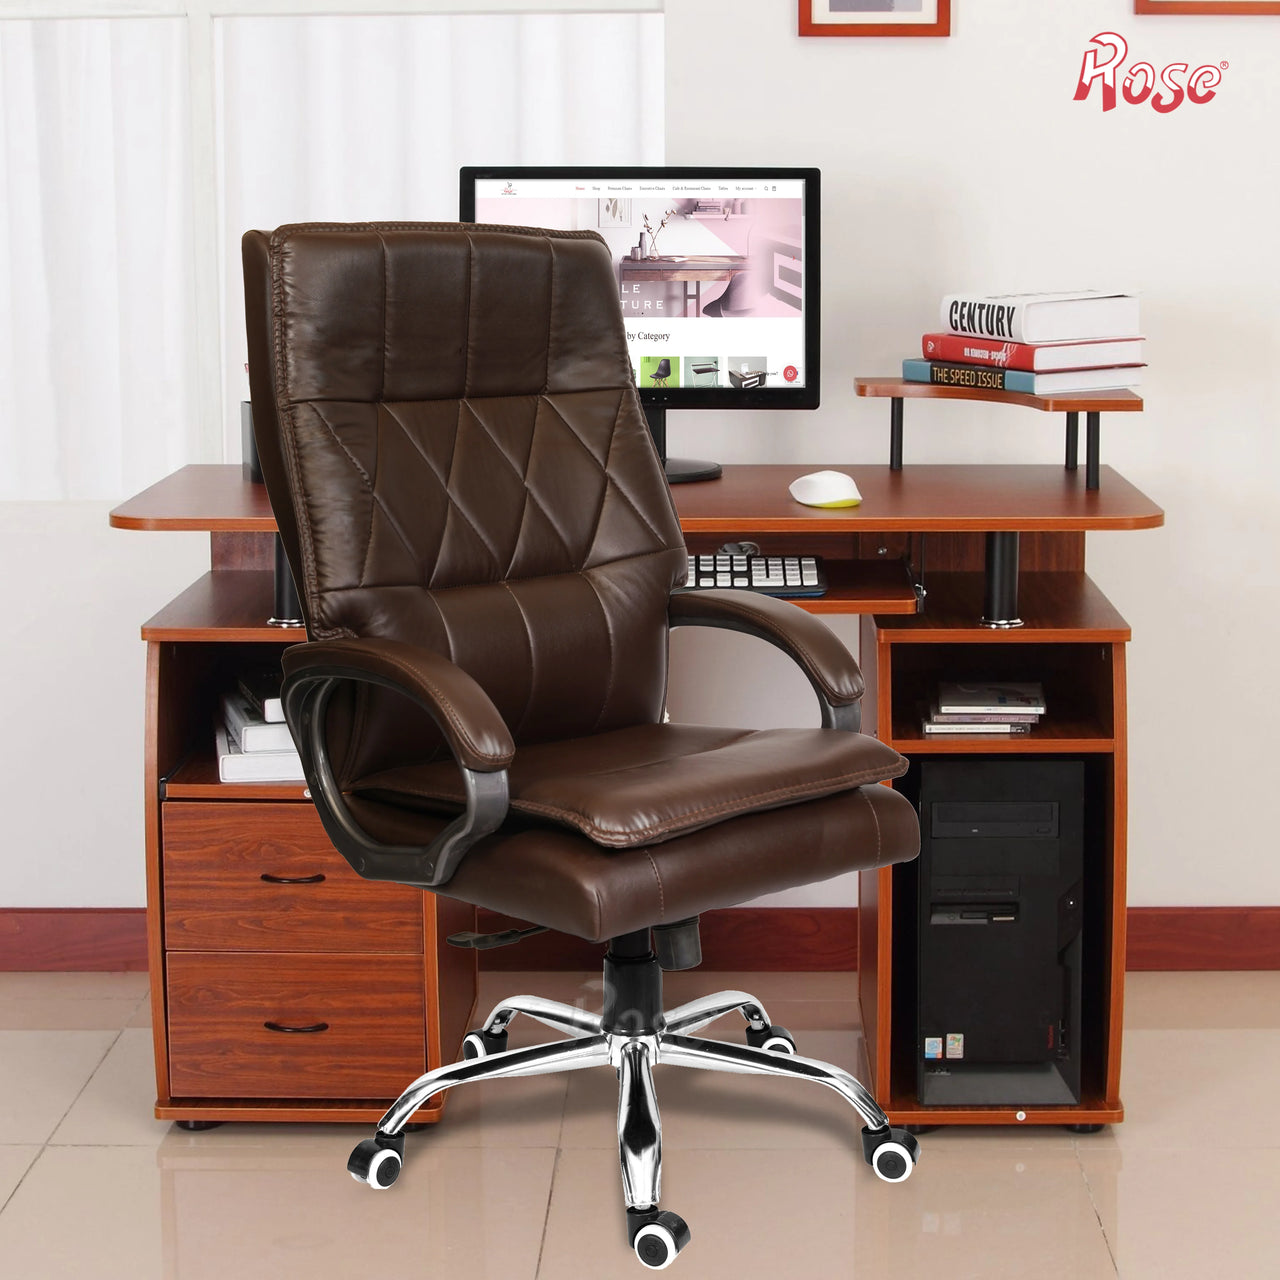 Harmony Executive High Back Chair (Brown)